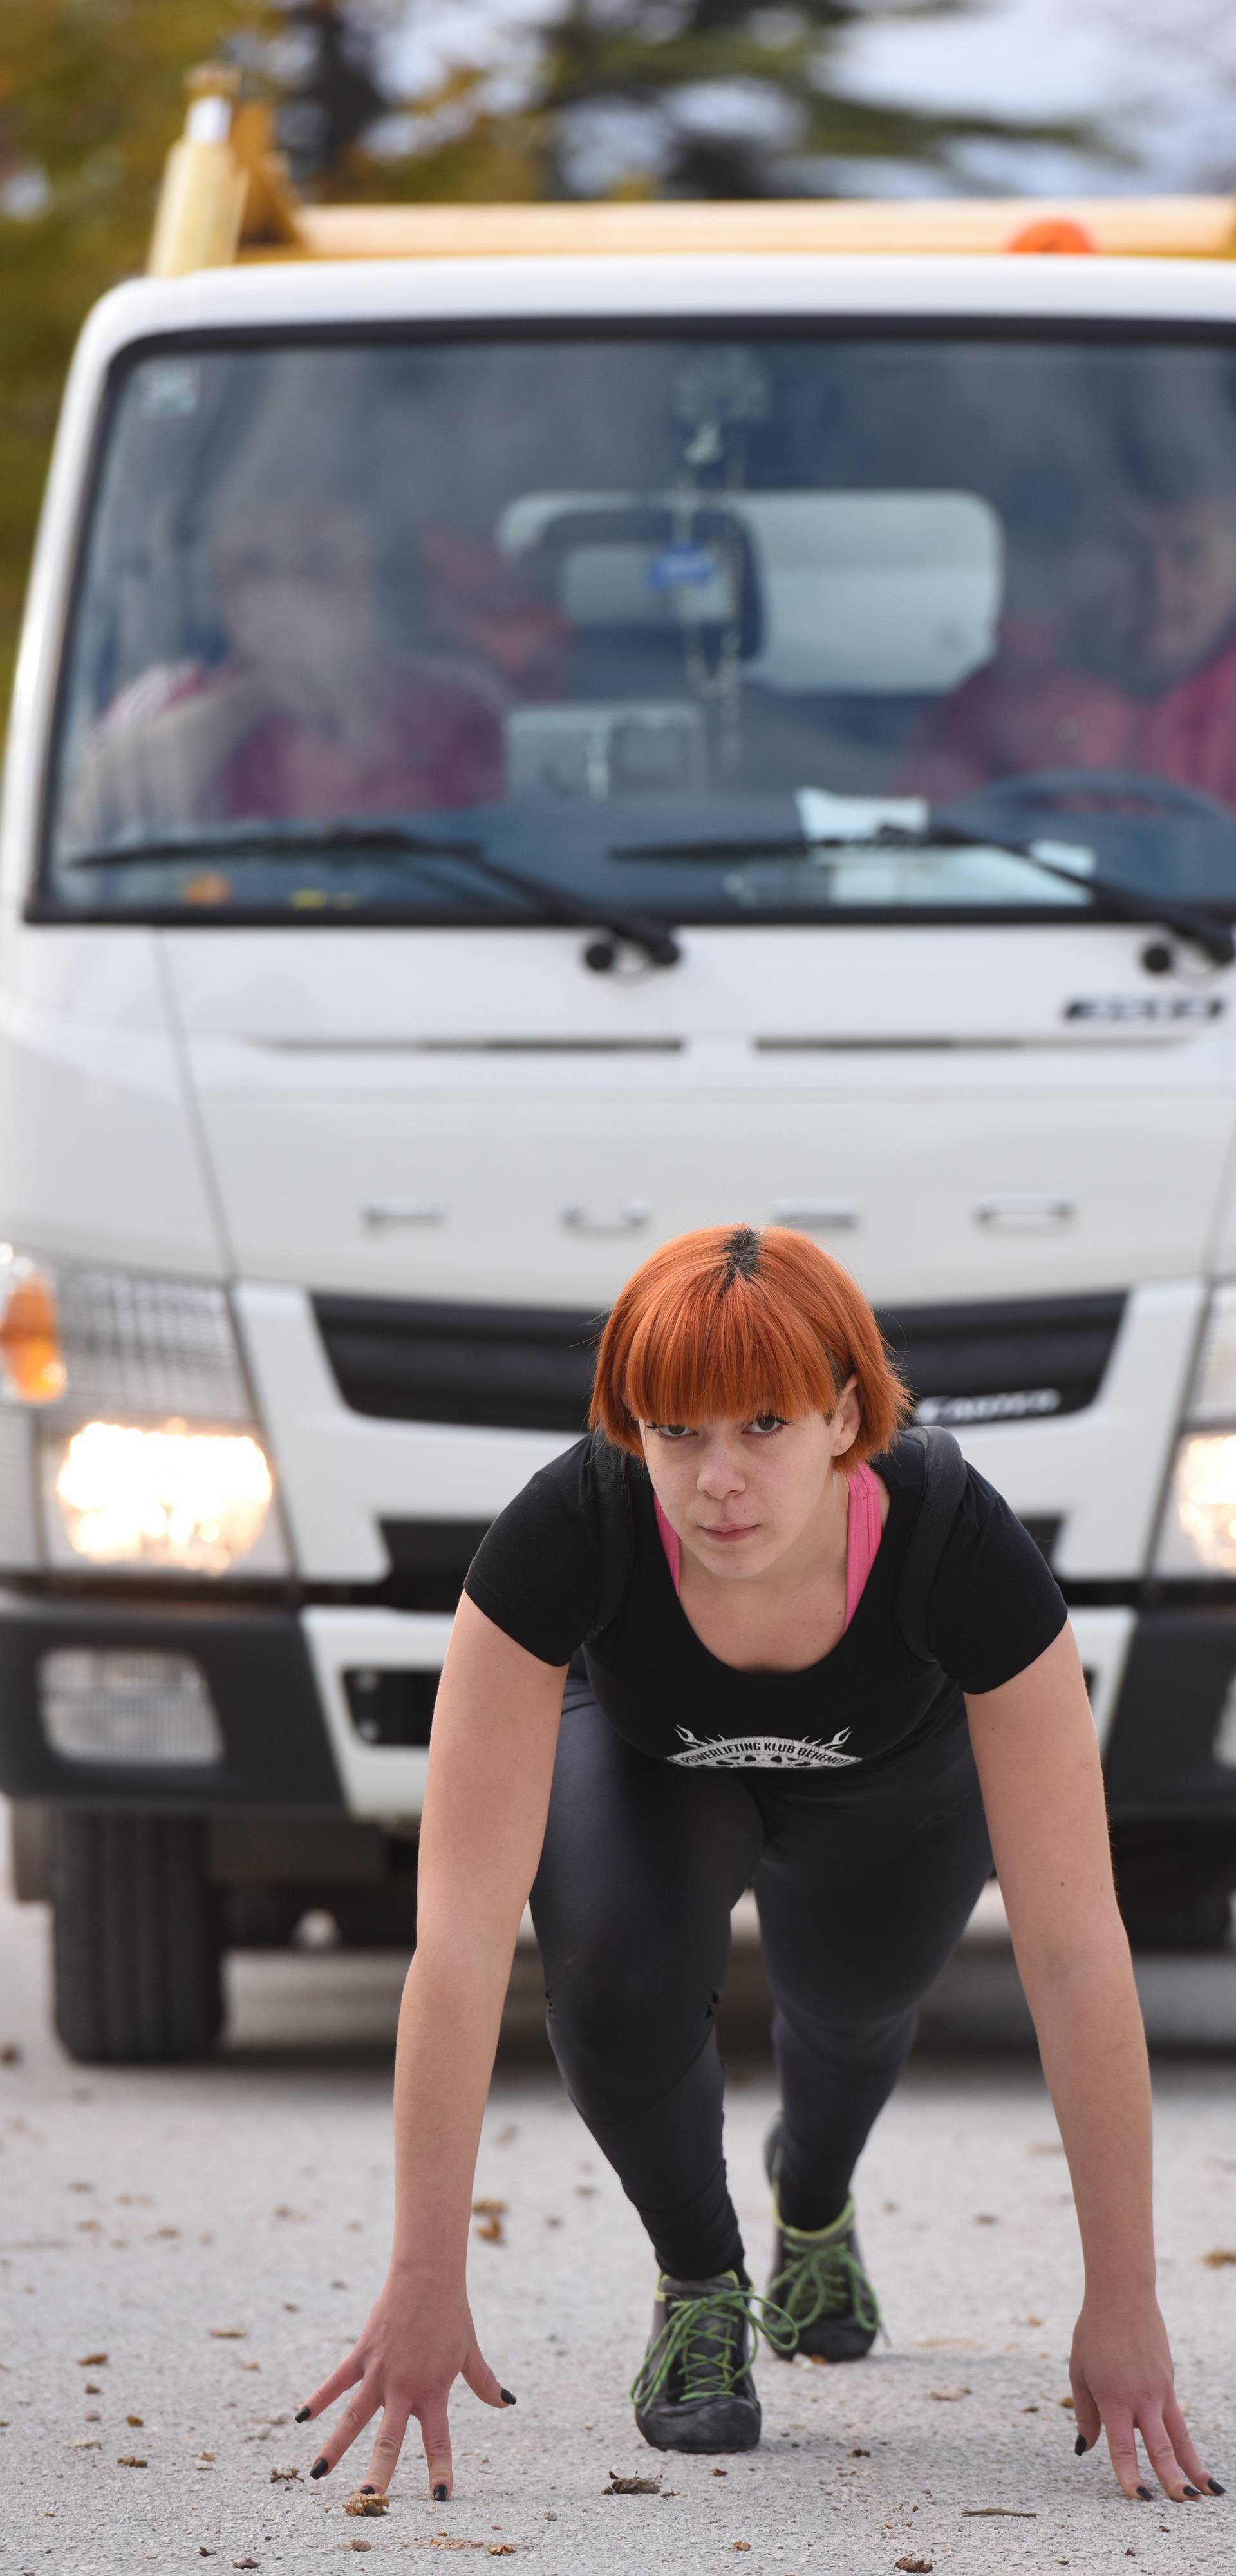 Lana vuče kamion bez muke: 'Dečki me se uglavnom plaše'